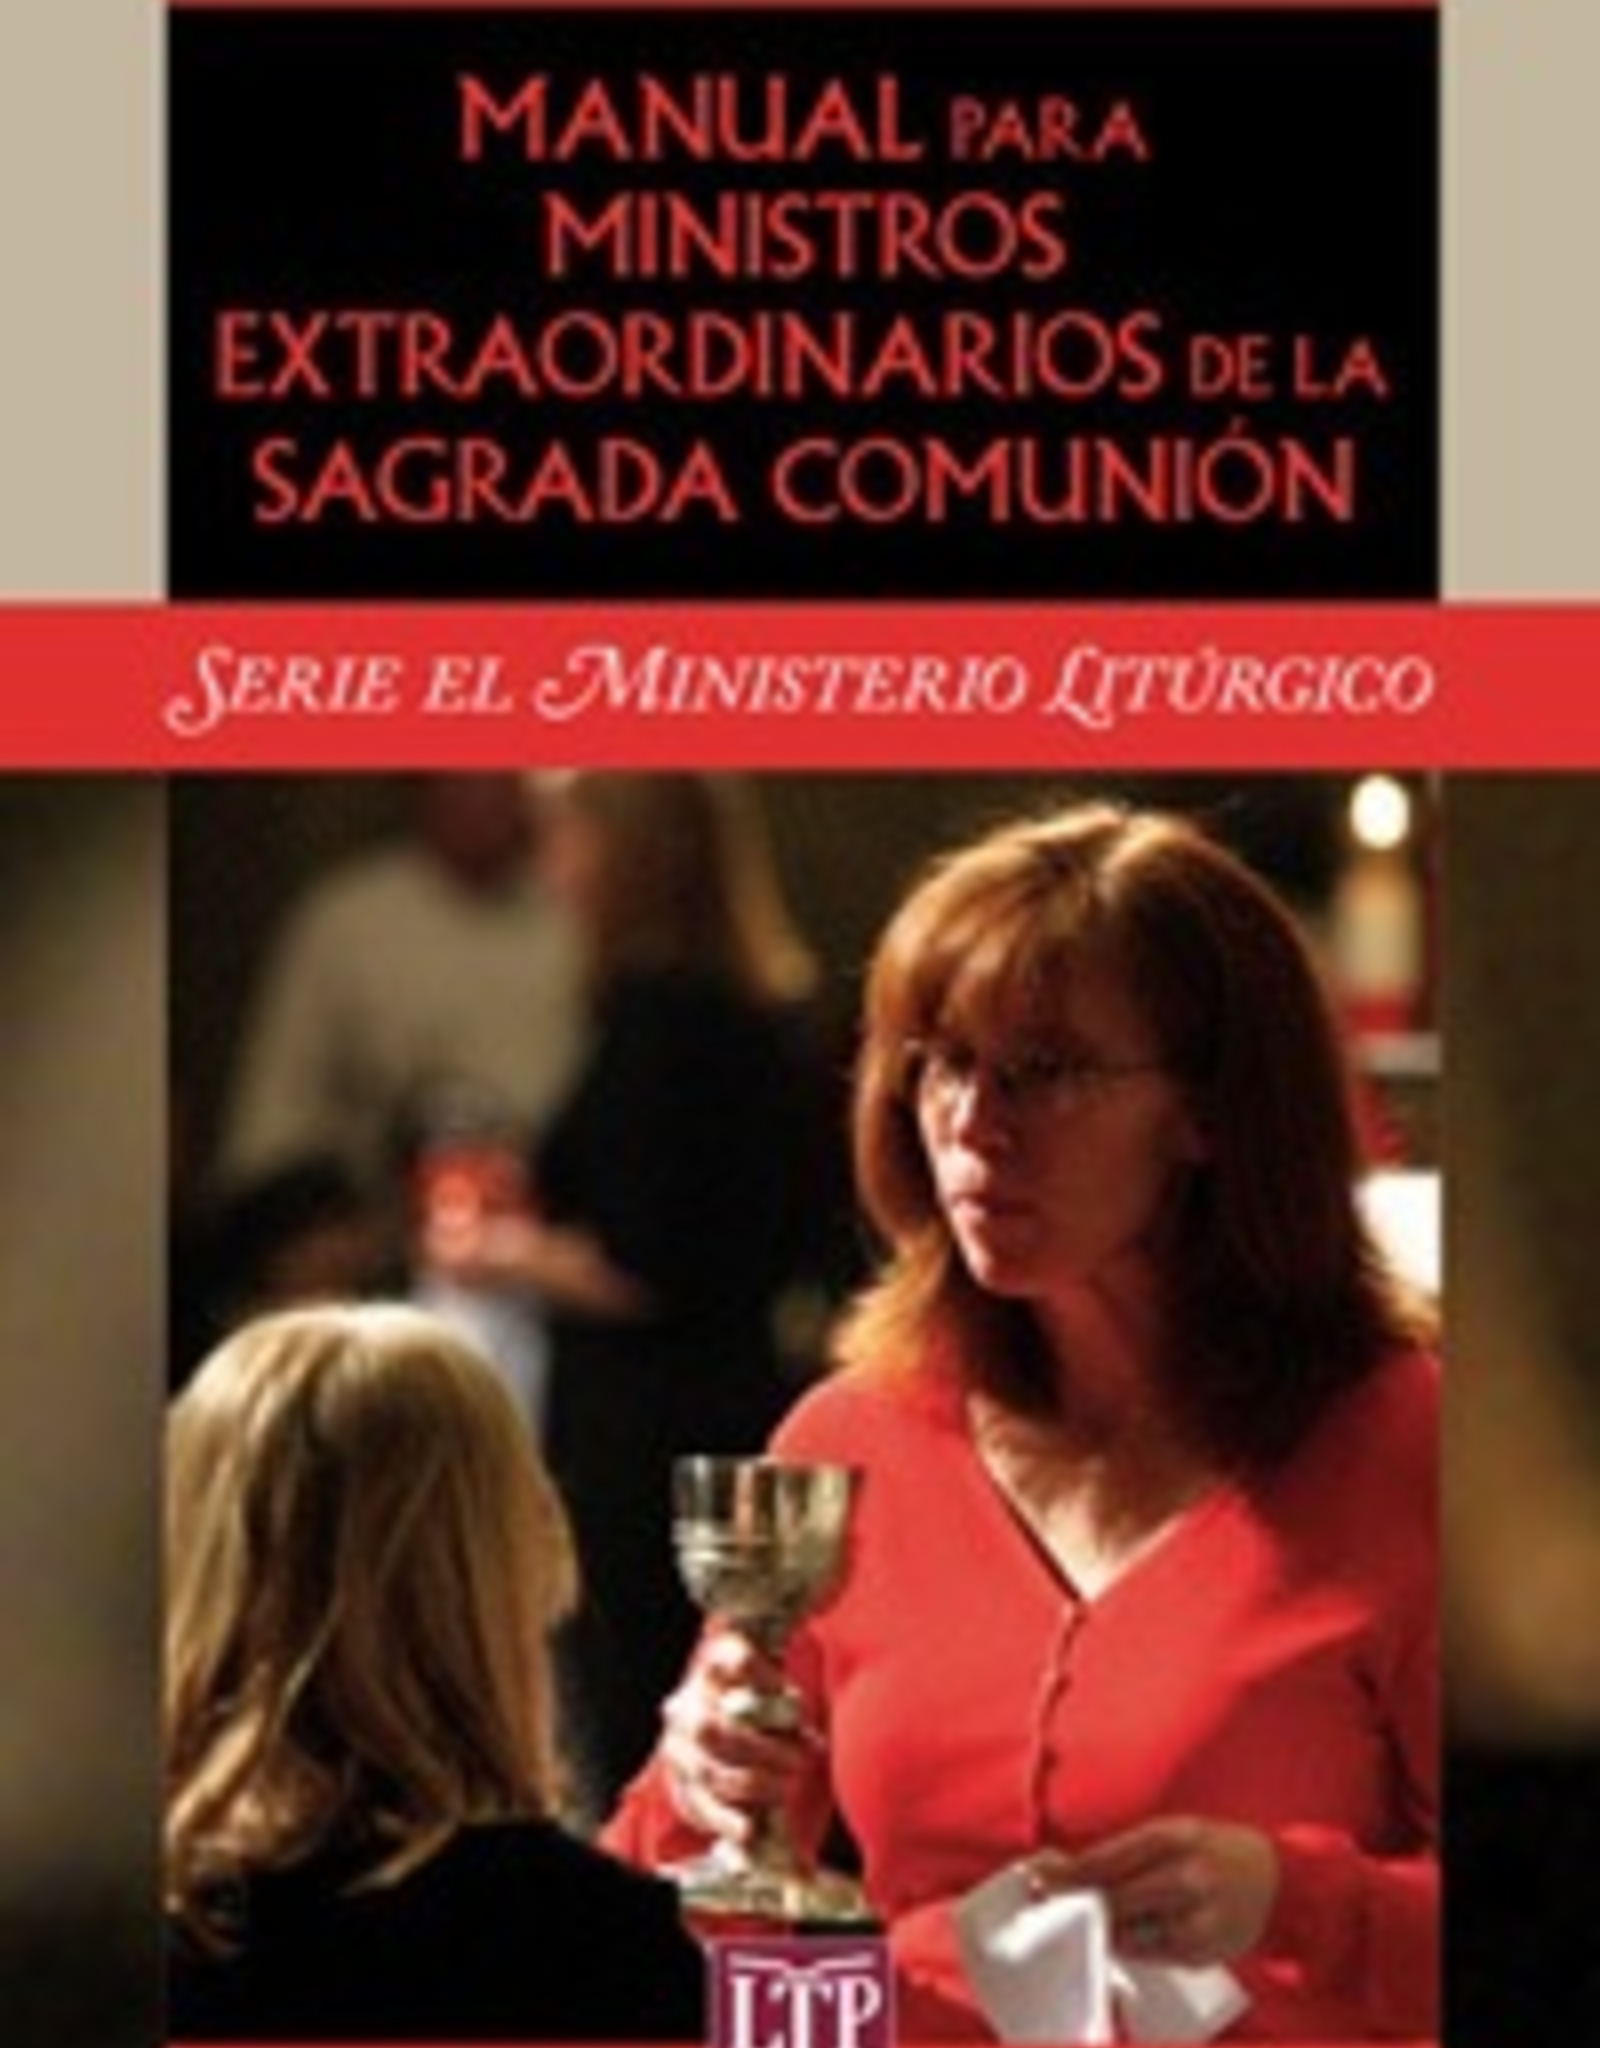 Liturgical Training Press Manual para Ministros Extraordinarios de la Sagrada ComuniÌ_n, Paul Turner and Kenneth A. Riley